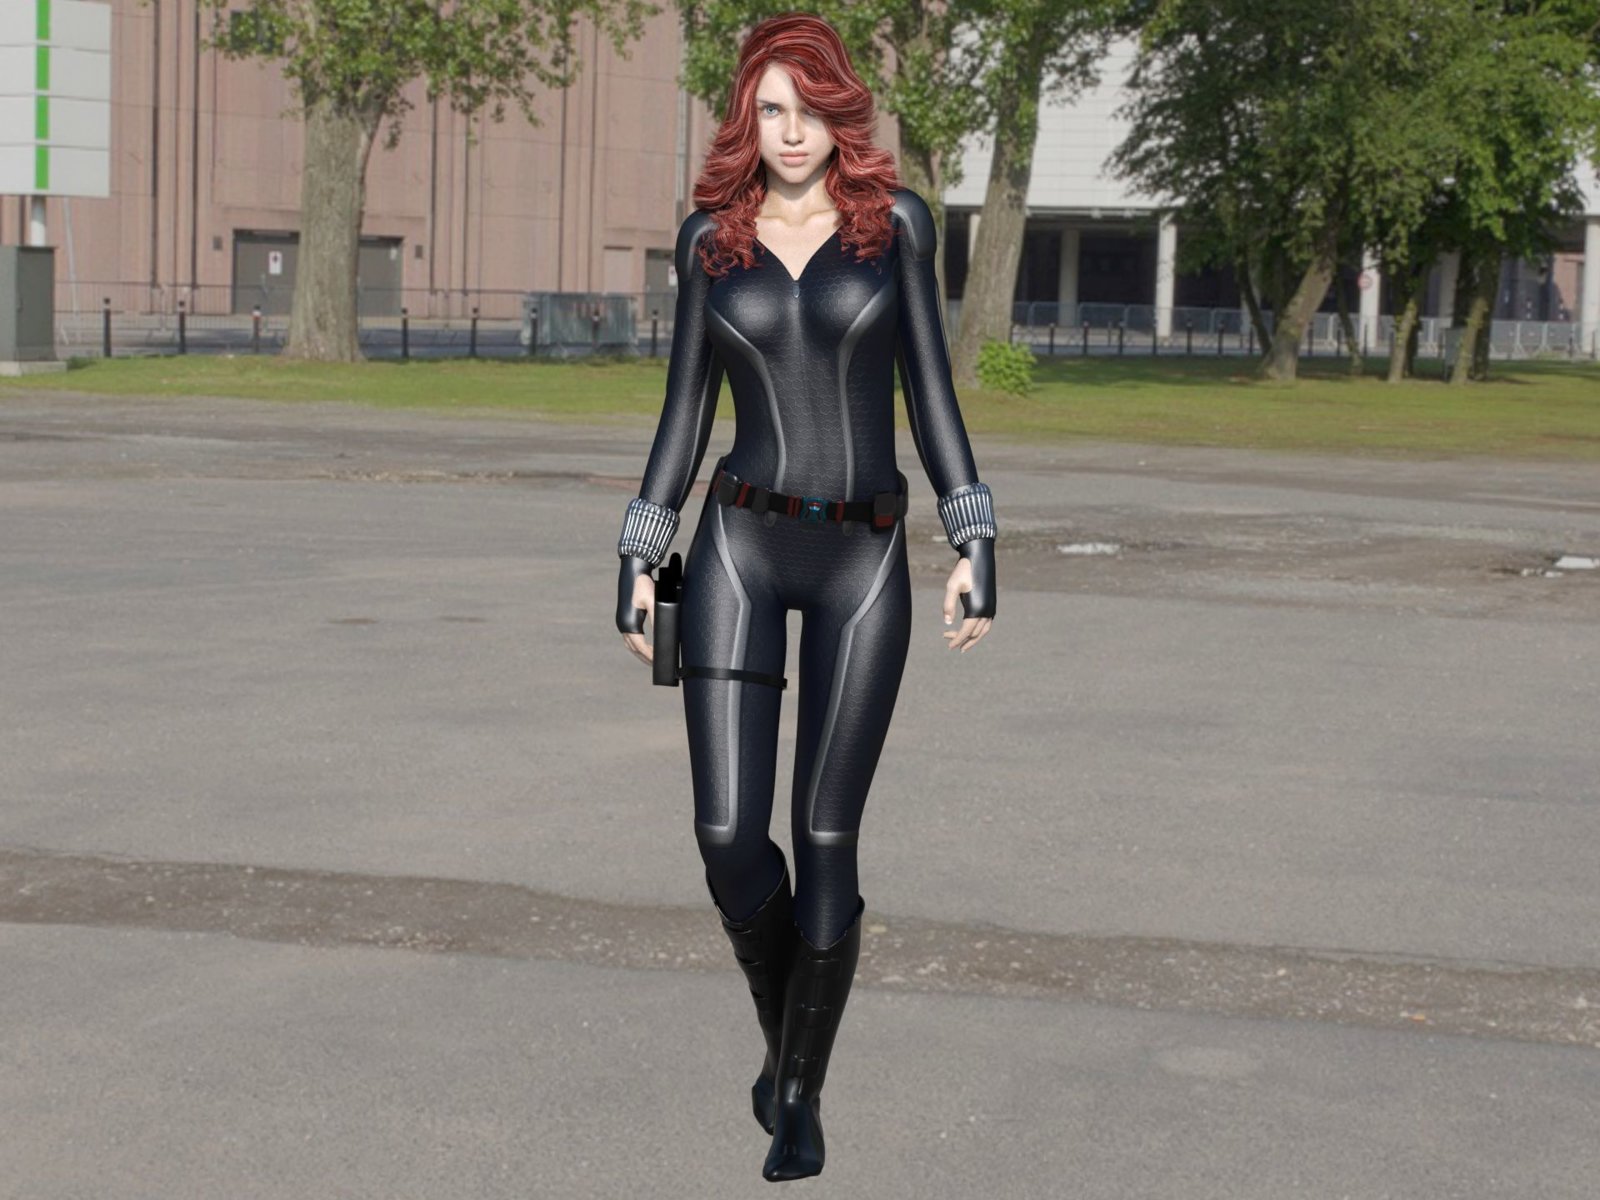 Black Widow Full Costume.jpg